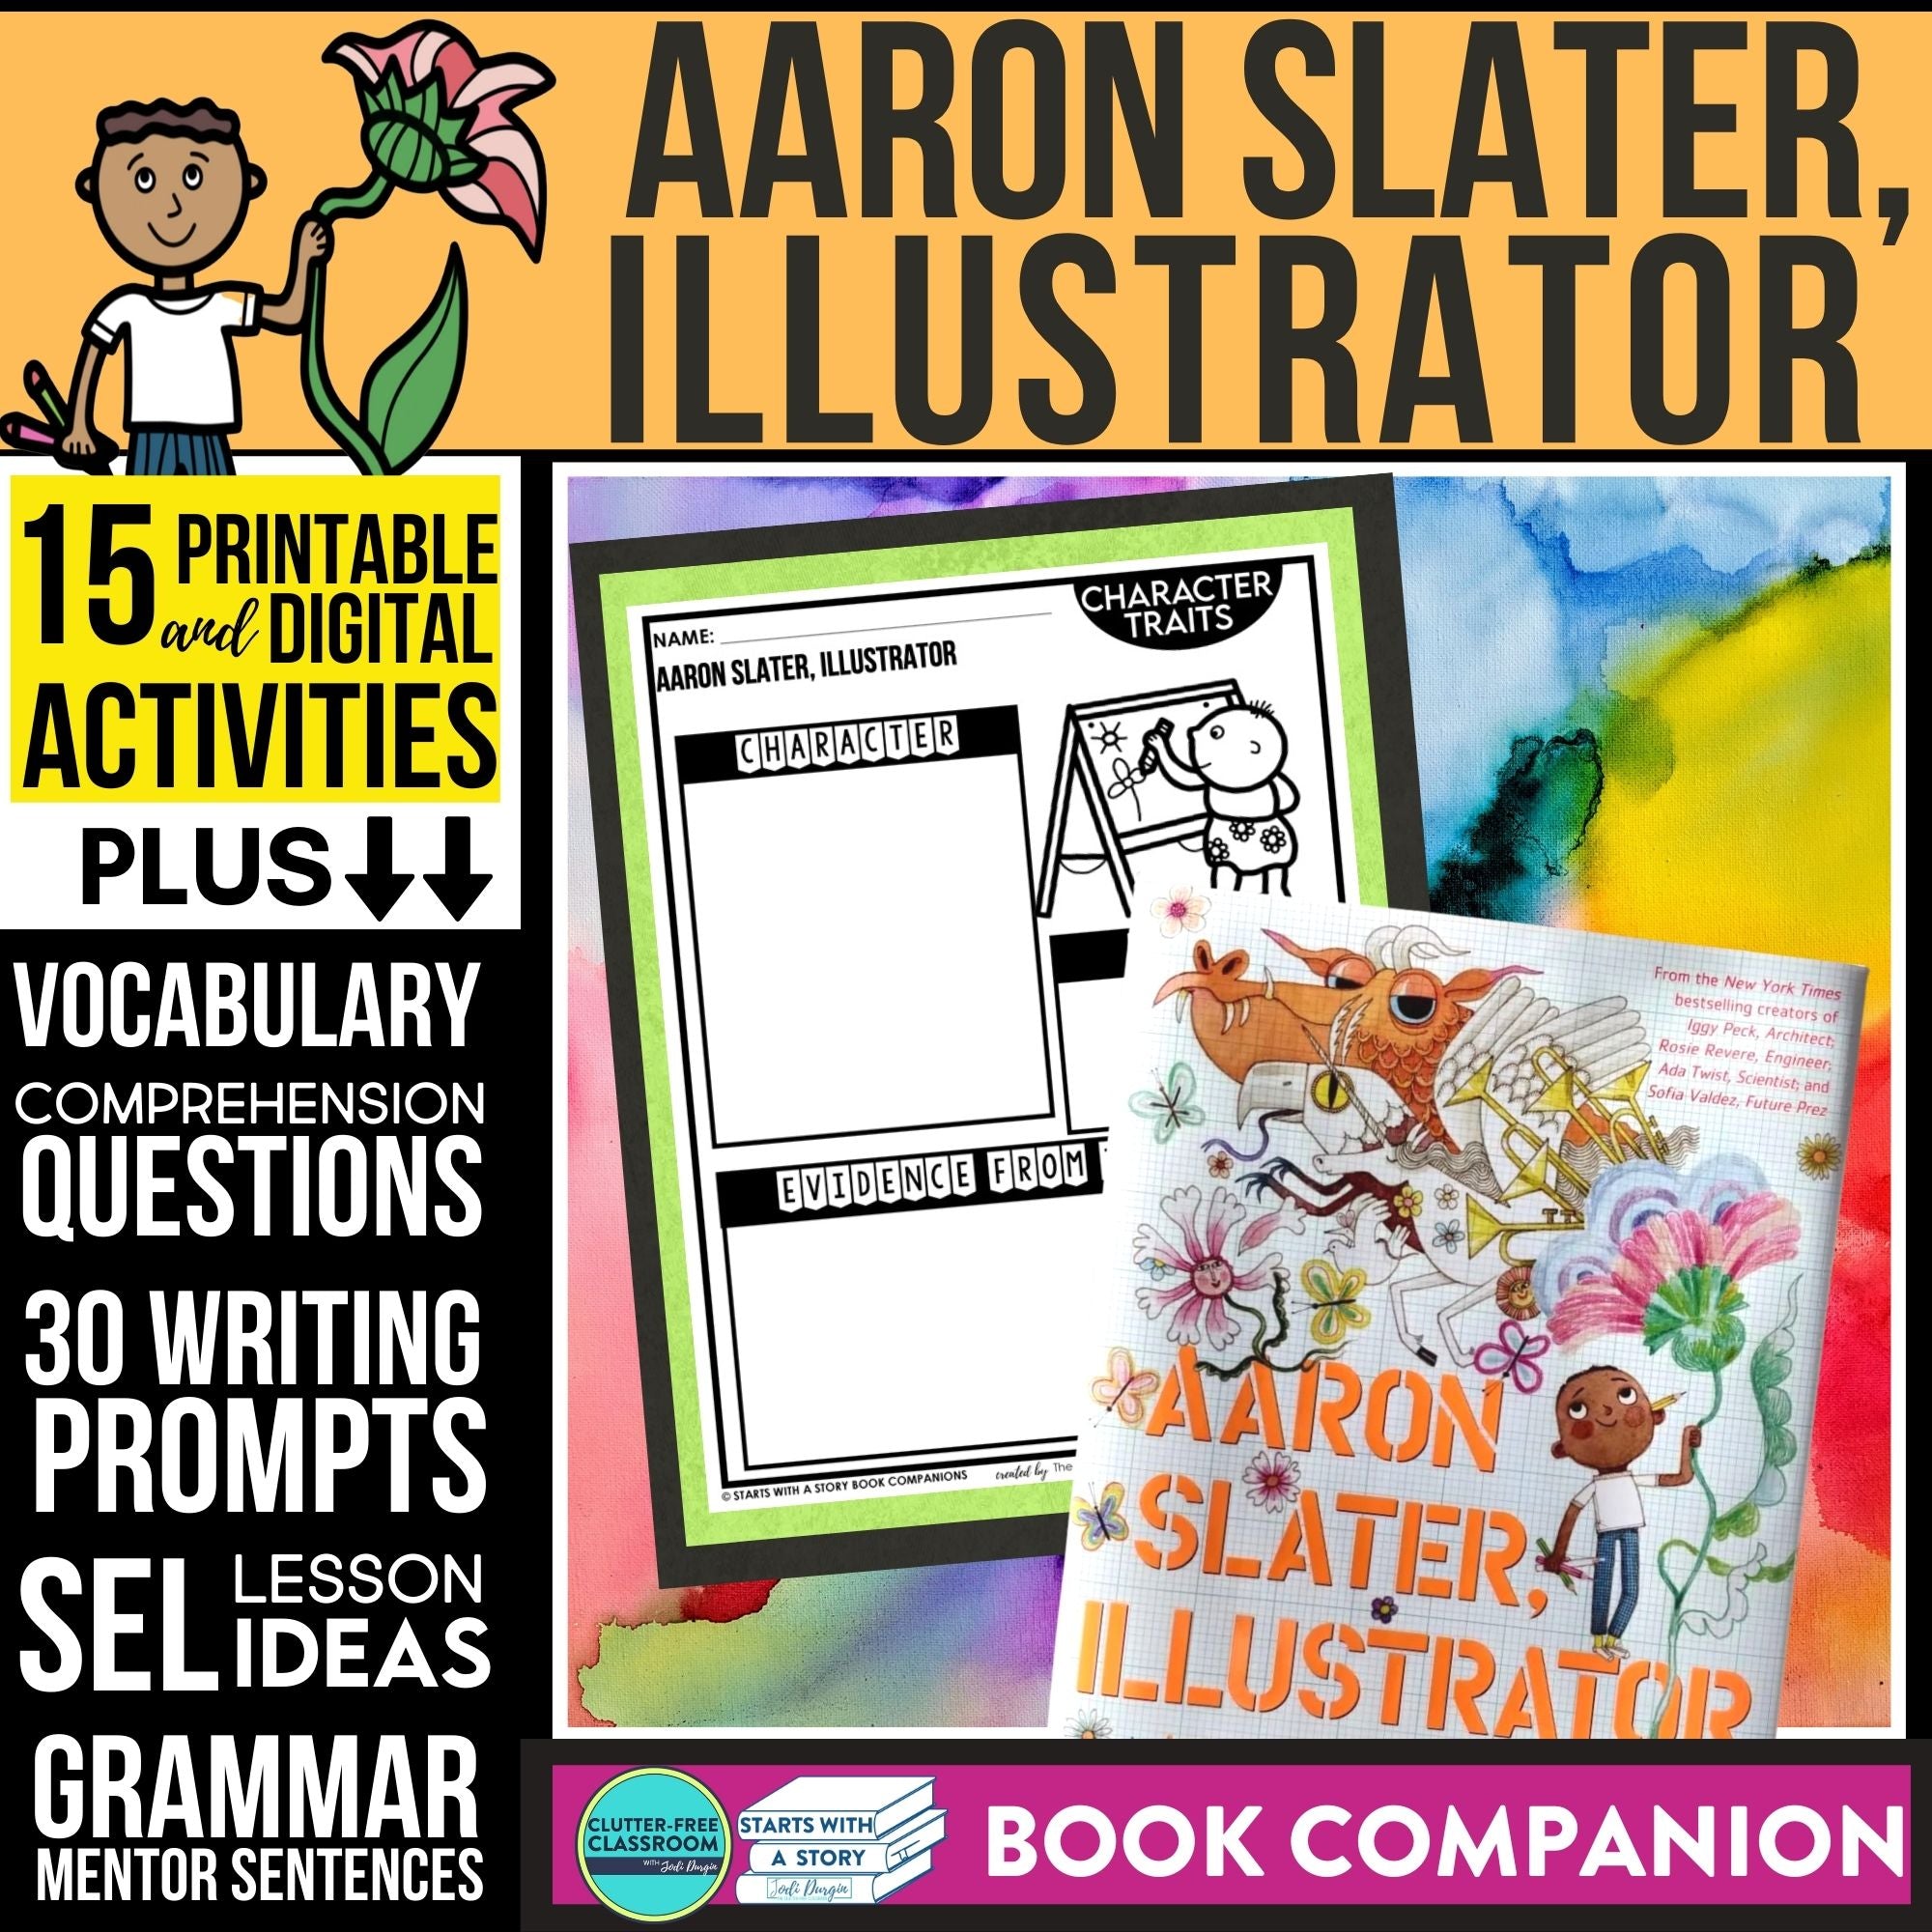 AARON SLATER, ILLUSTRATOR activities and lesson plan ideas